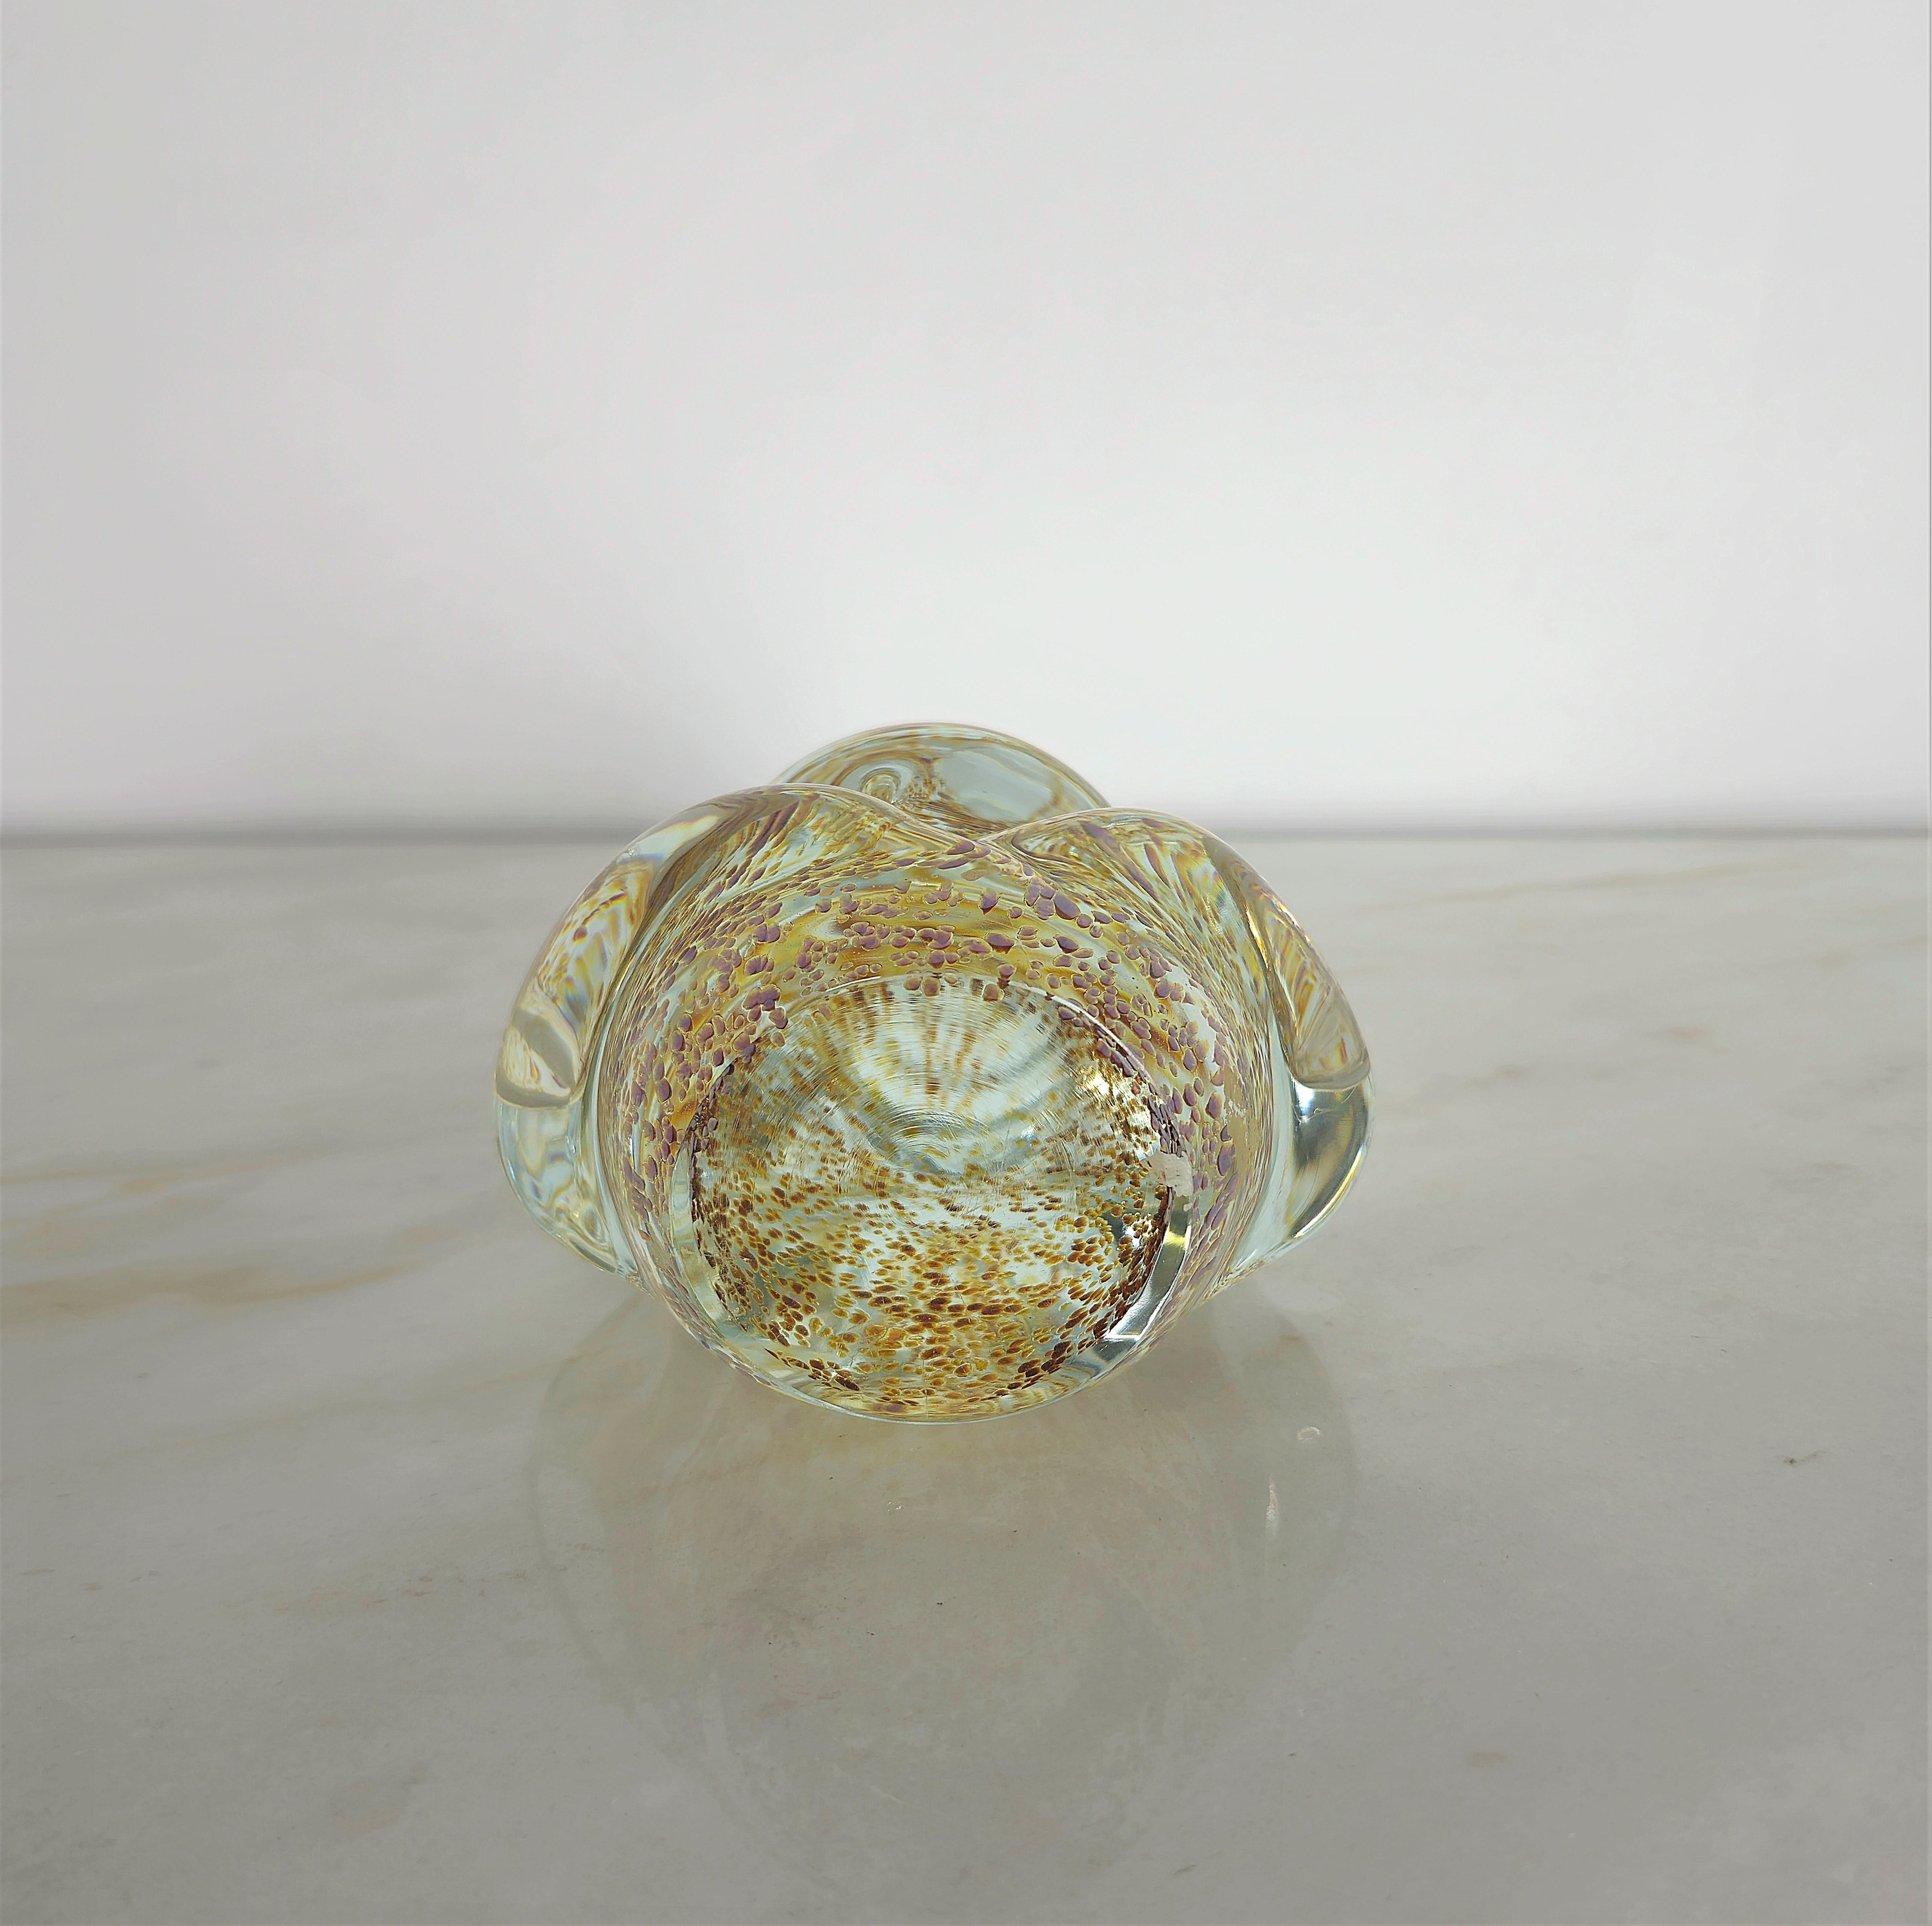 Decorative Object Sculpture Murano Glass Buddha Midcentury Italian Design 1970s For Sale 3